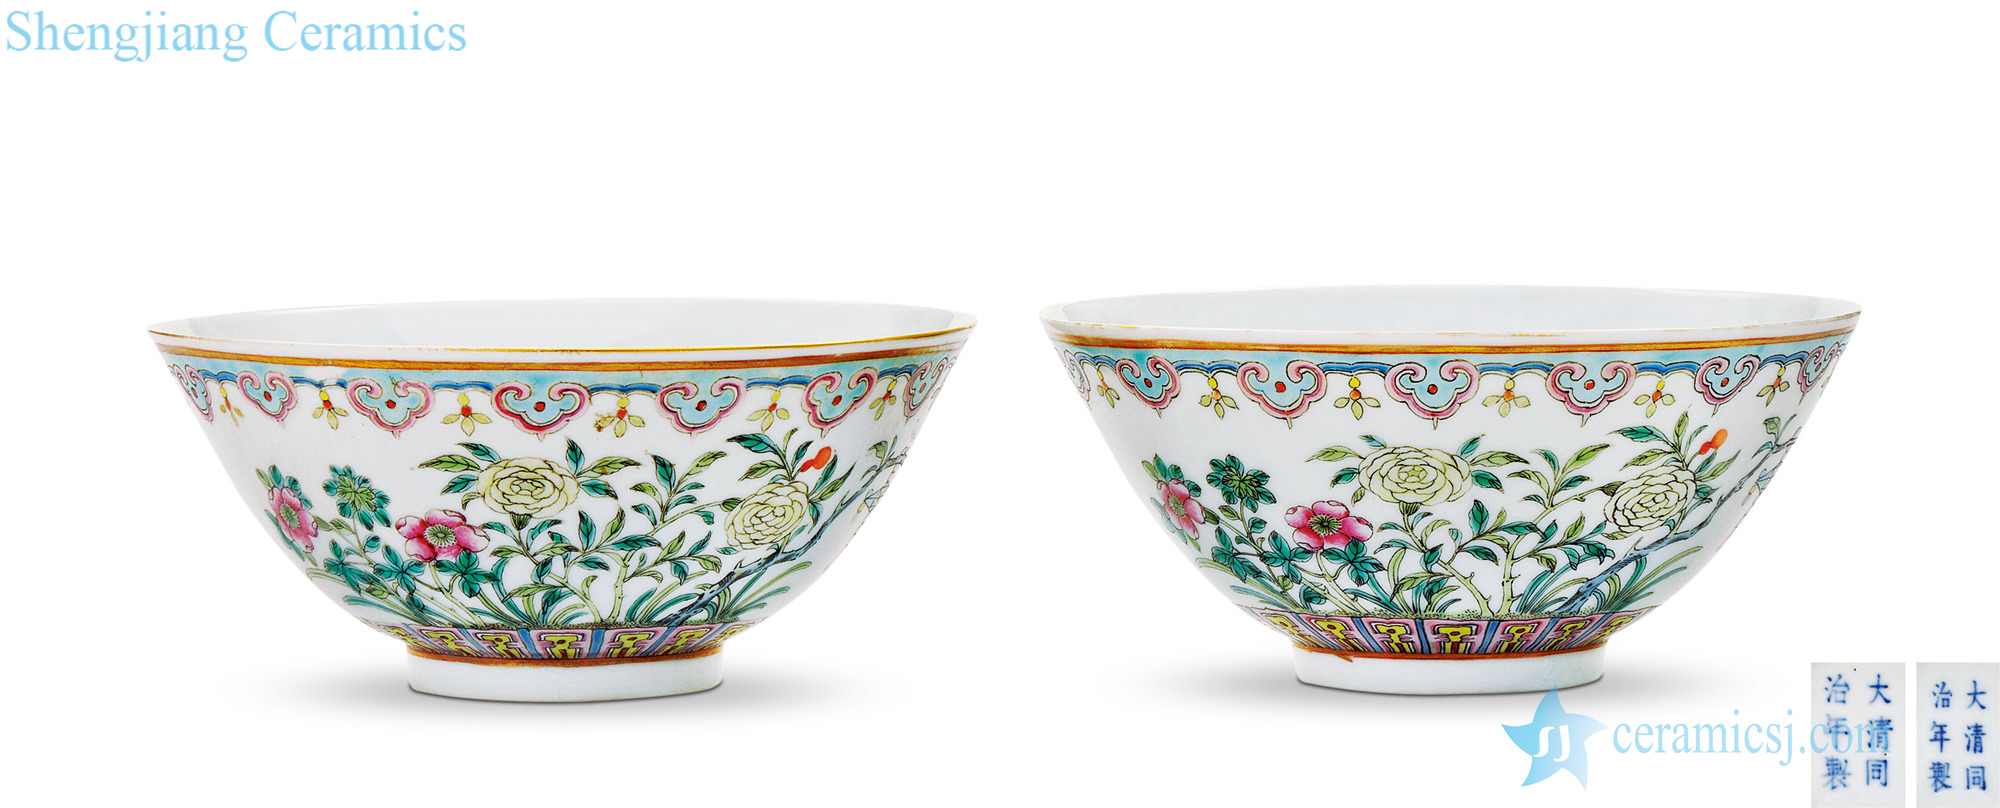 Dajing pastel flowers green-splashed bowls (a)